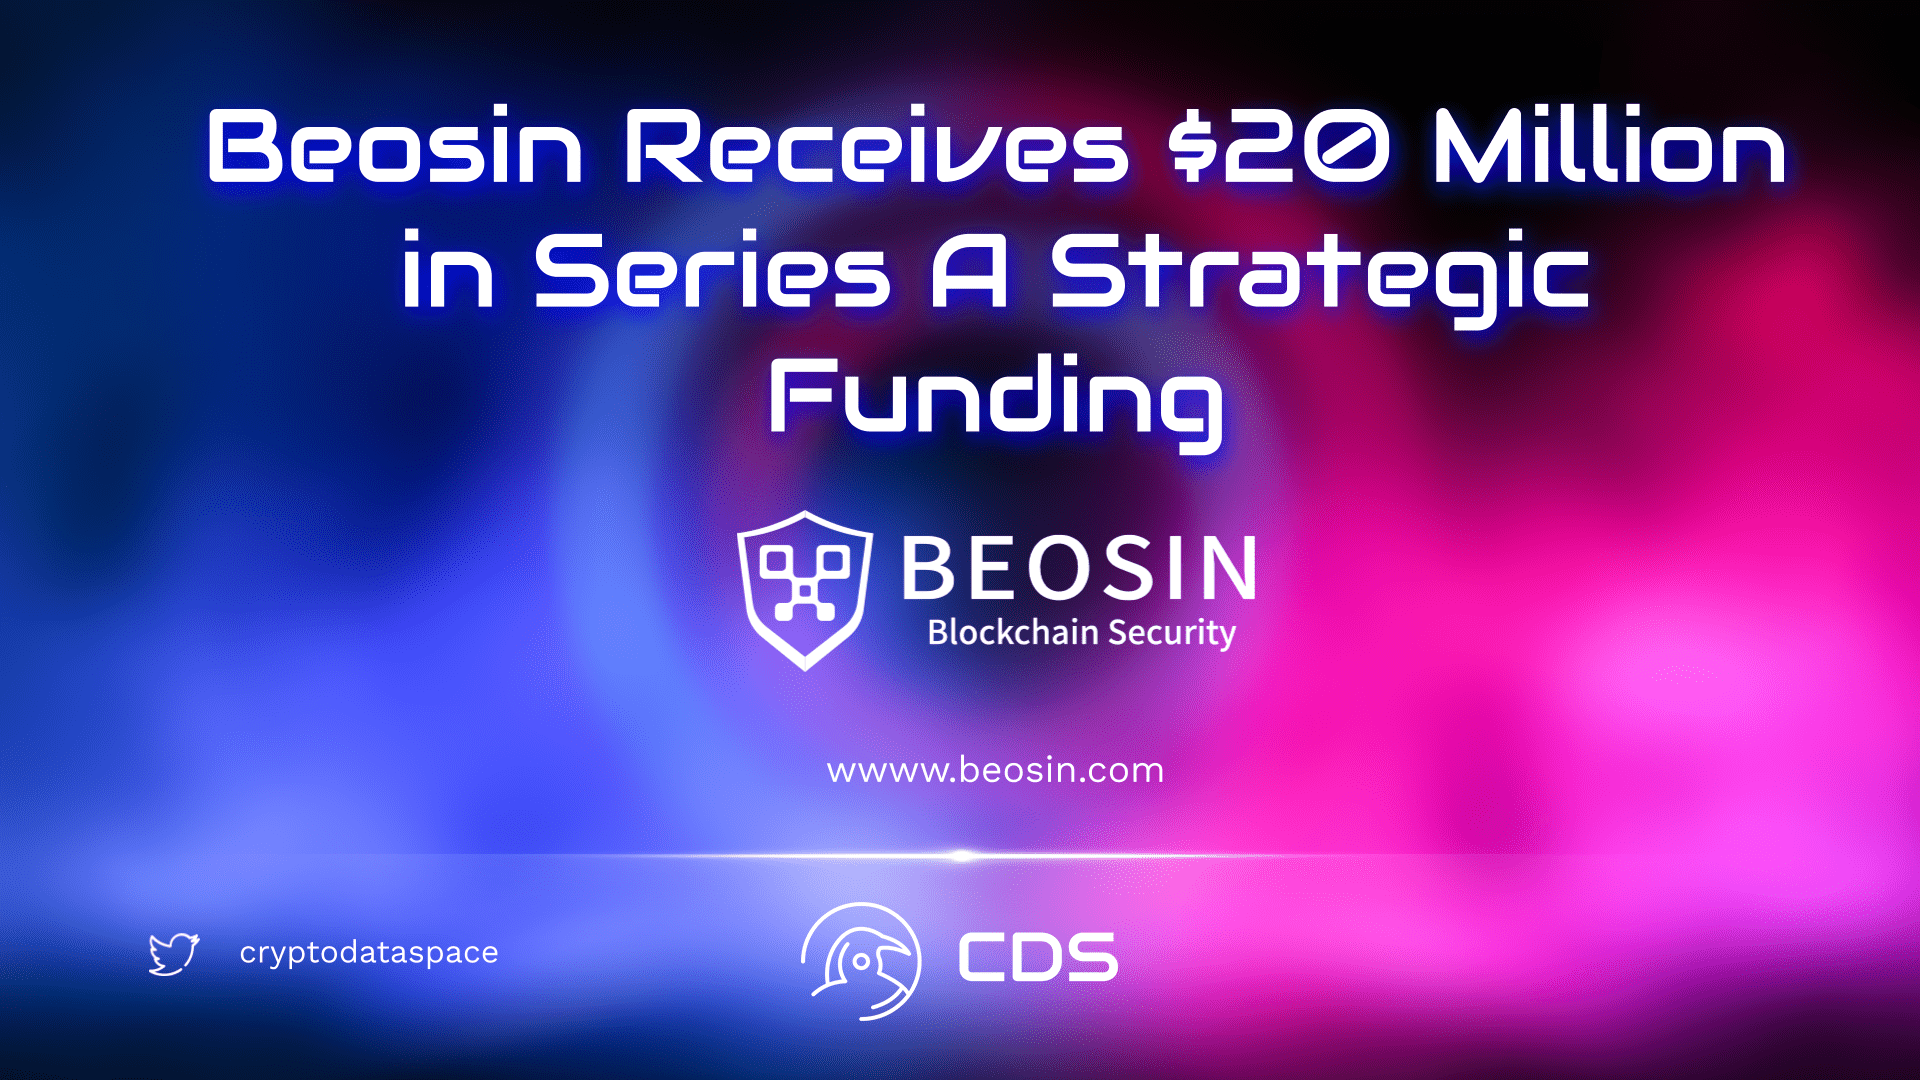 Beosin Receives $20 Million in Series A Strategic Funding